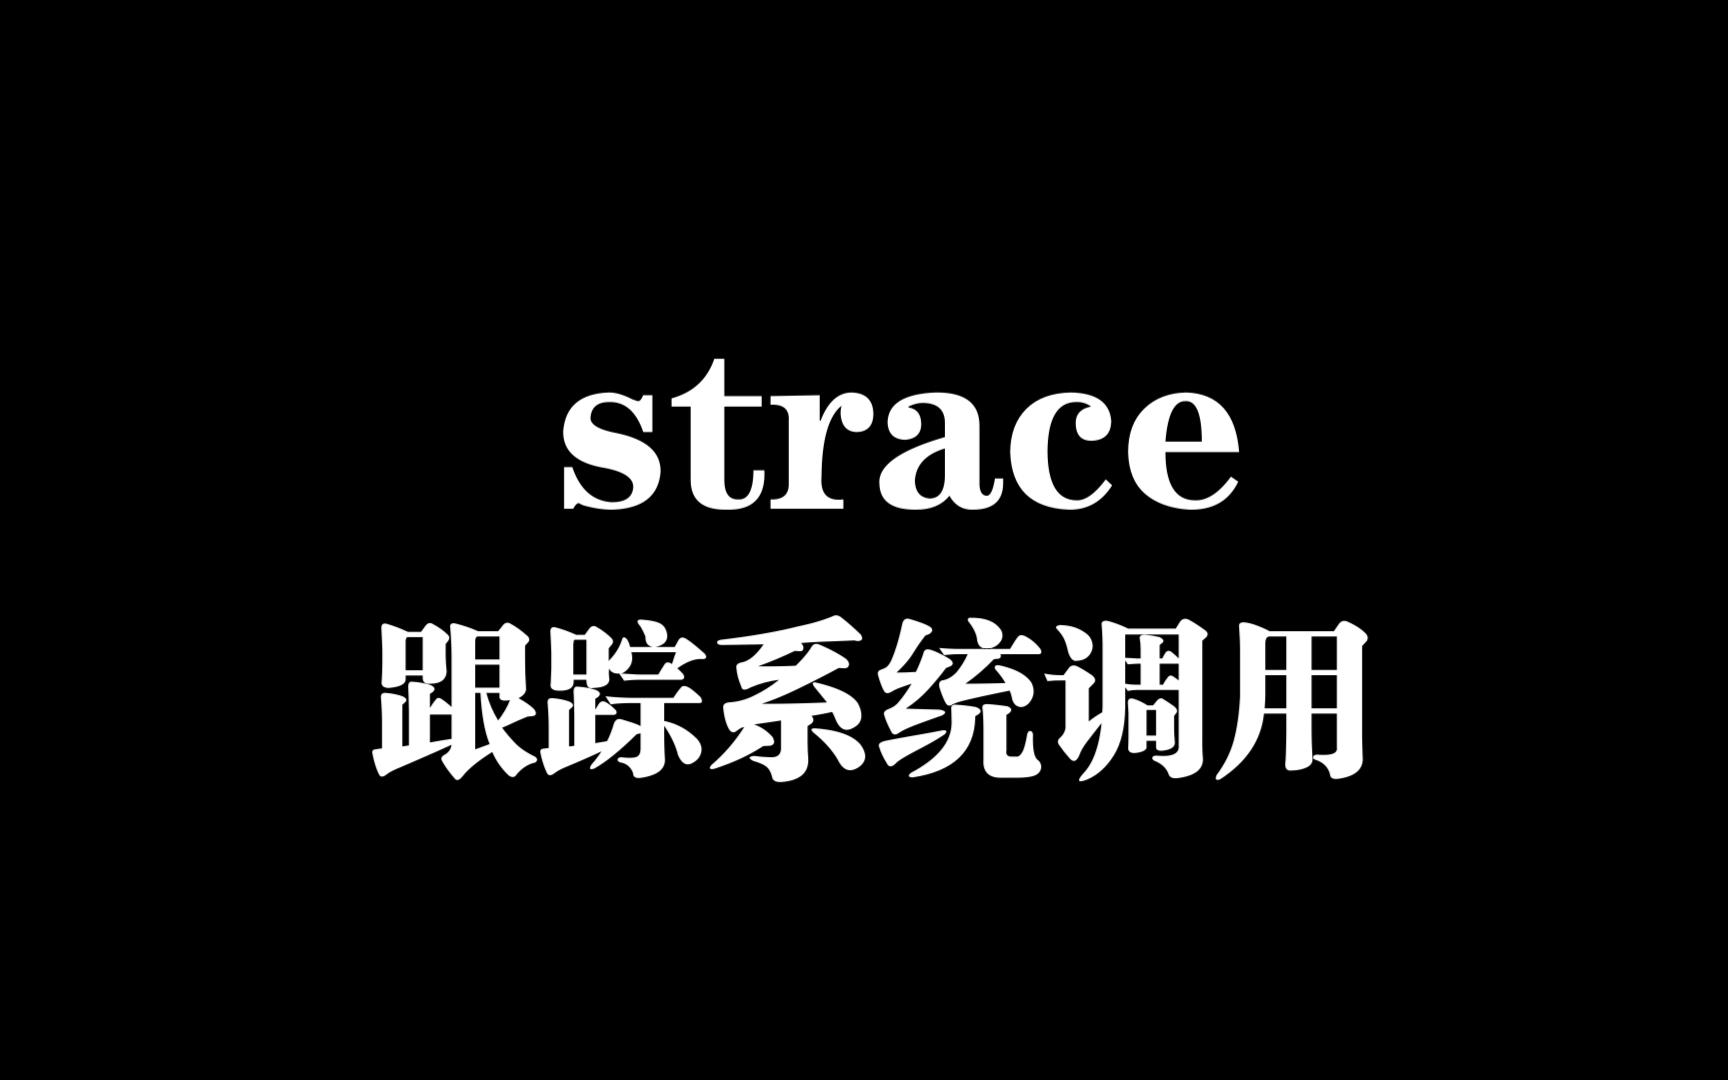 strace跟踪系统调用的使用案例